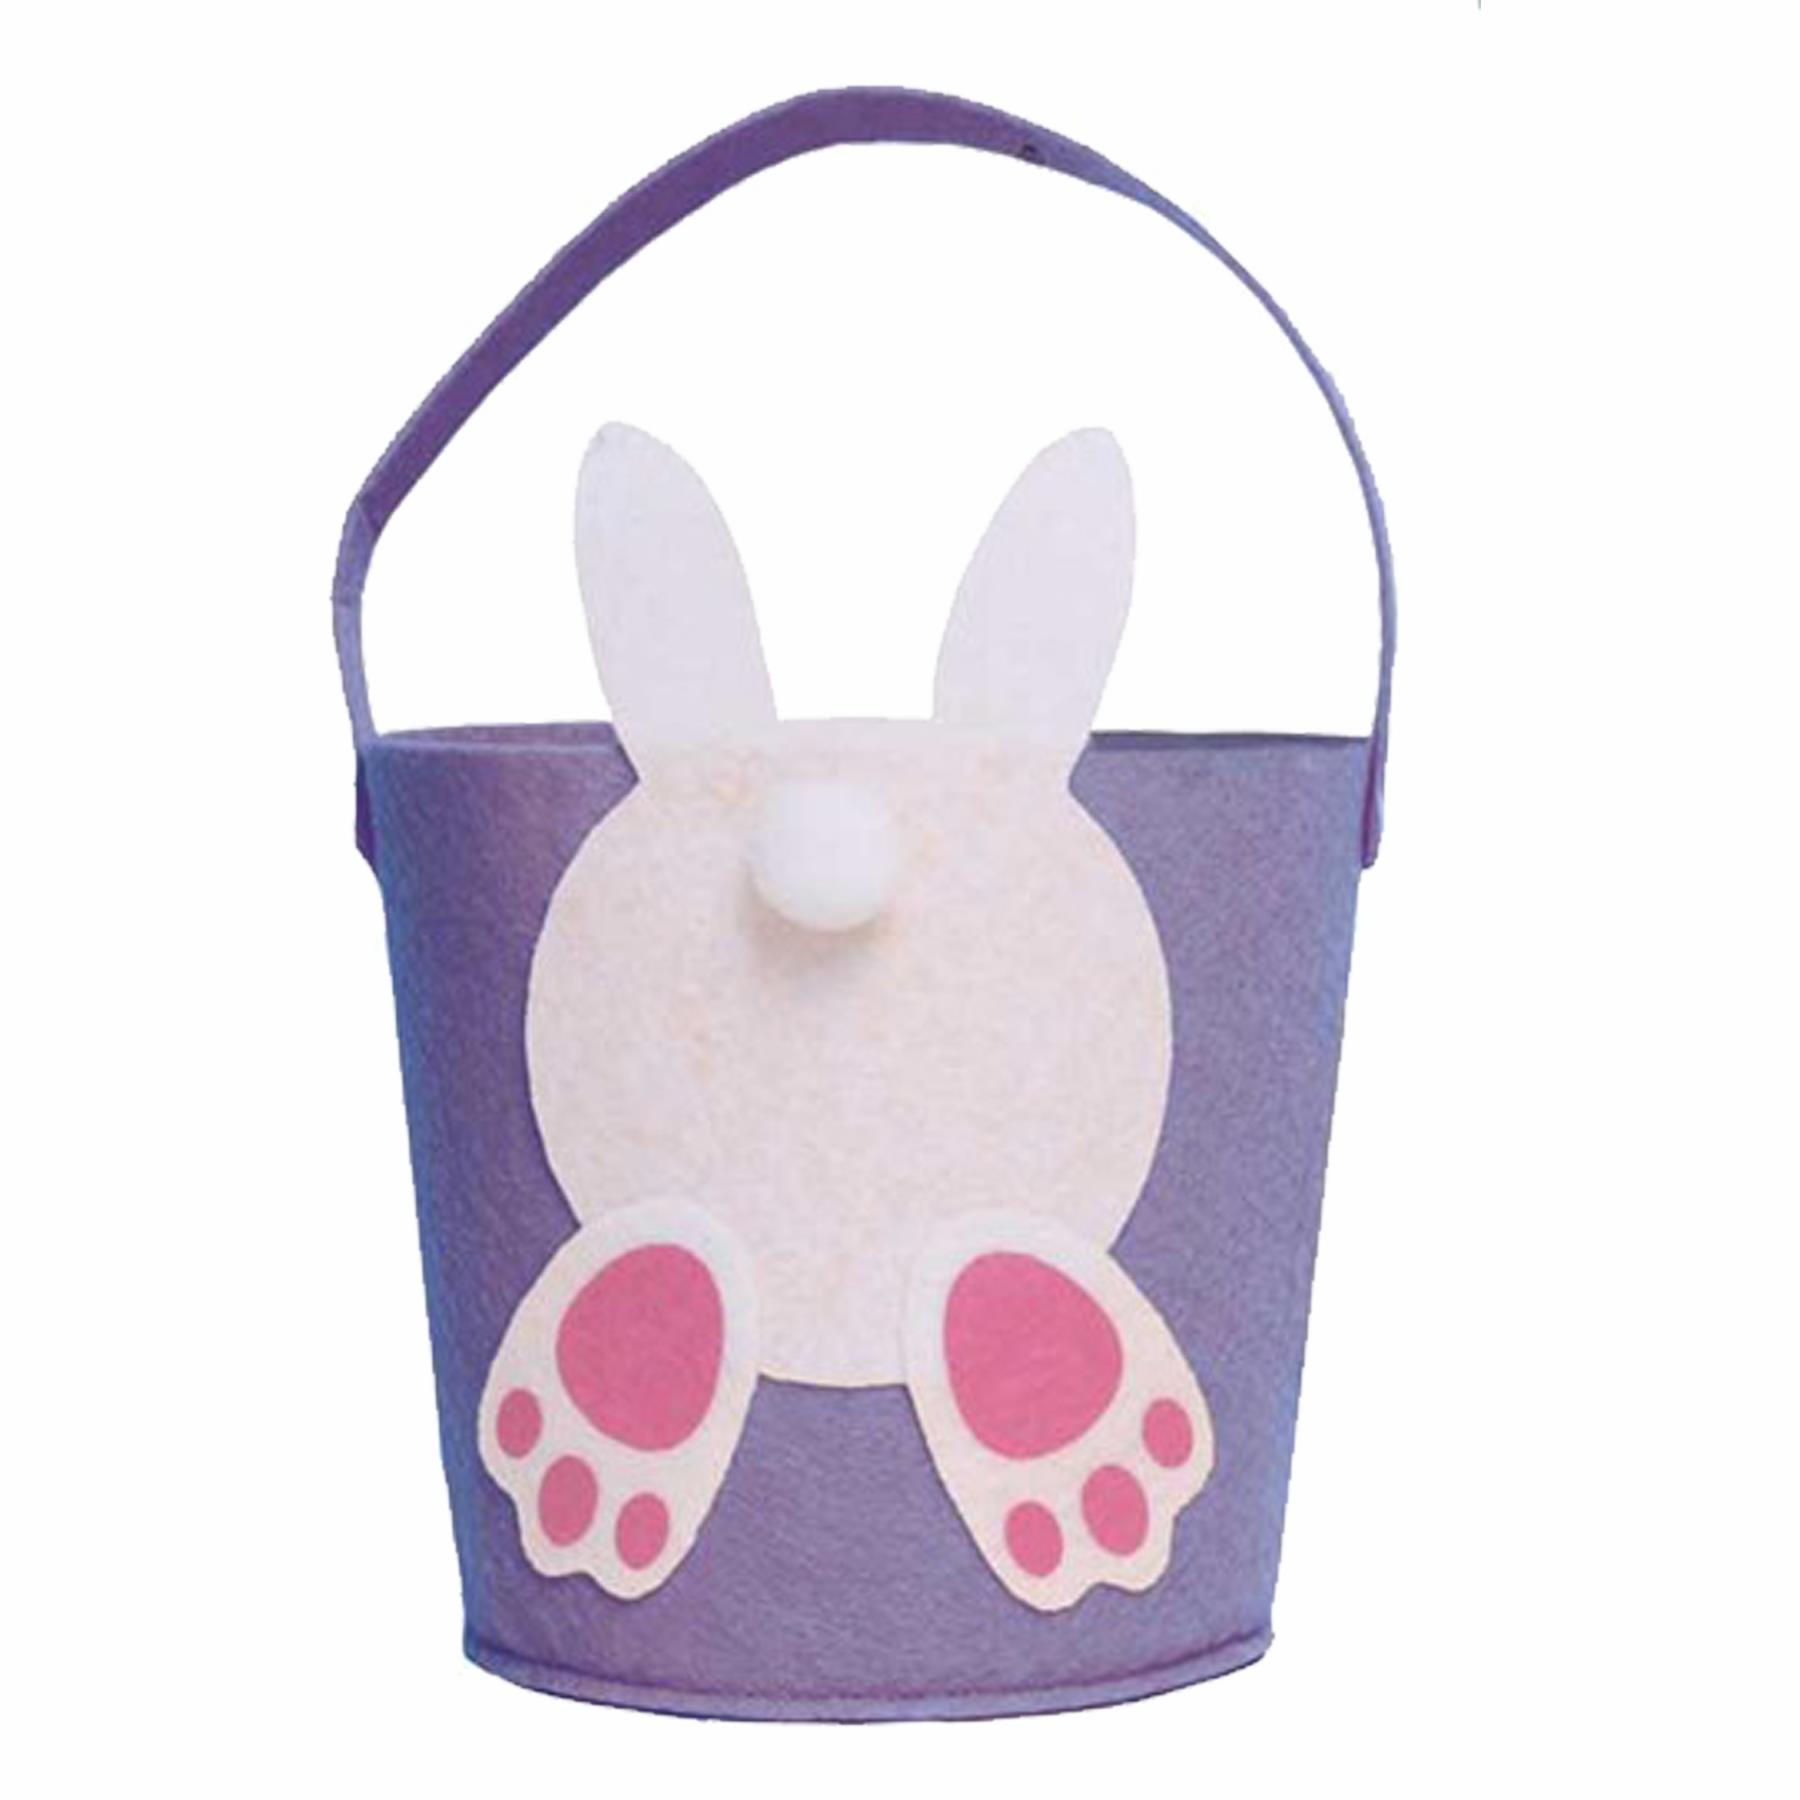 Easter Baskets, Buckets, Egg Hunt Accessories - Felt Bucket Purple Bunny